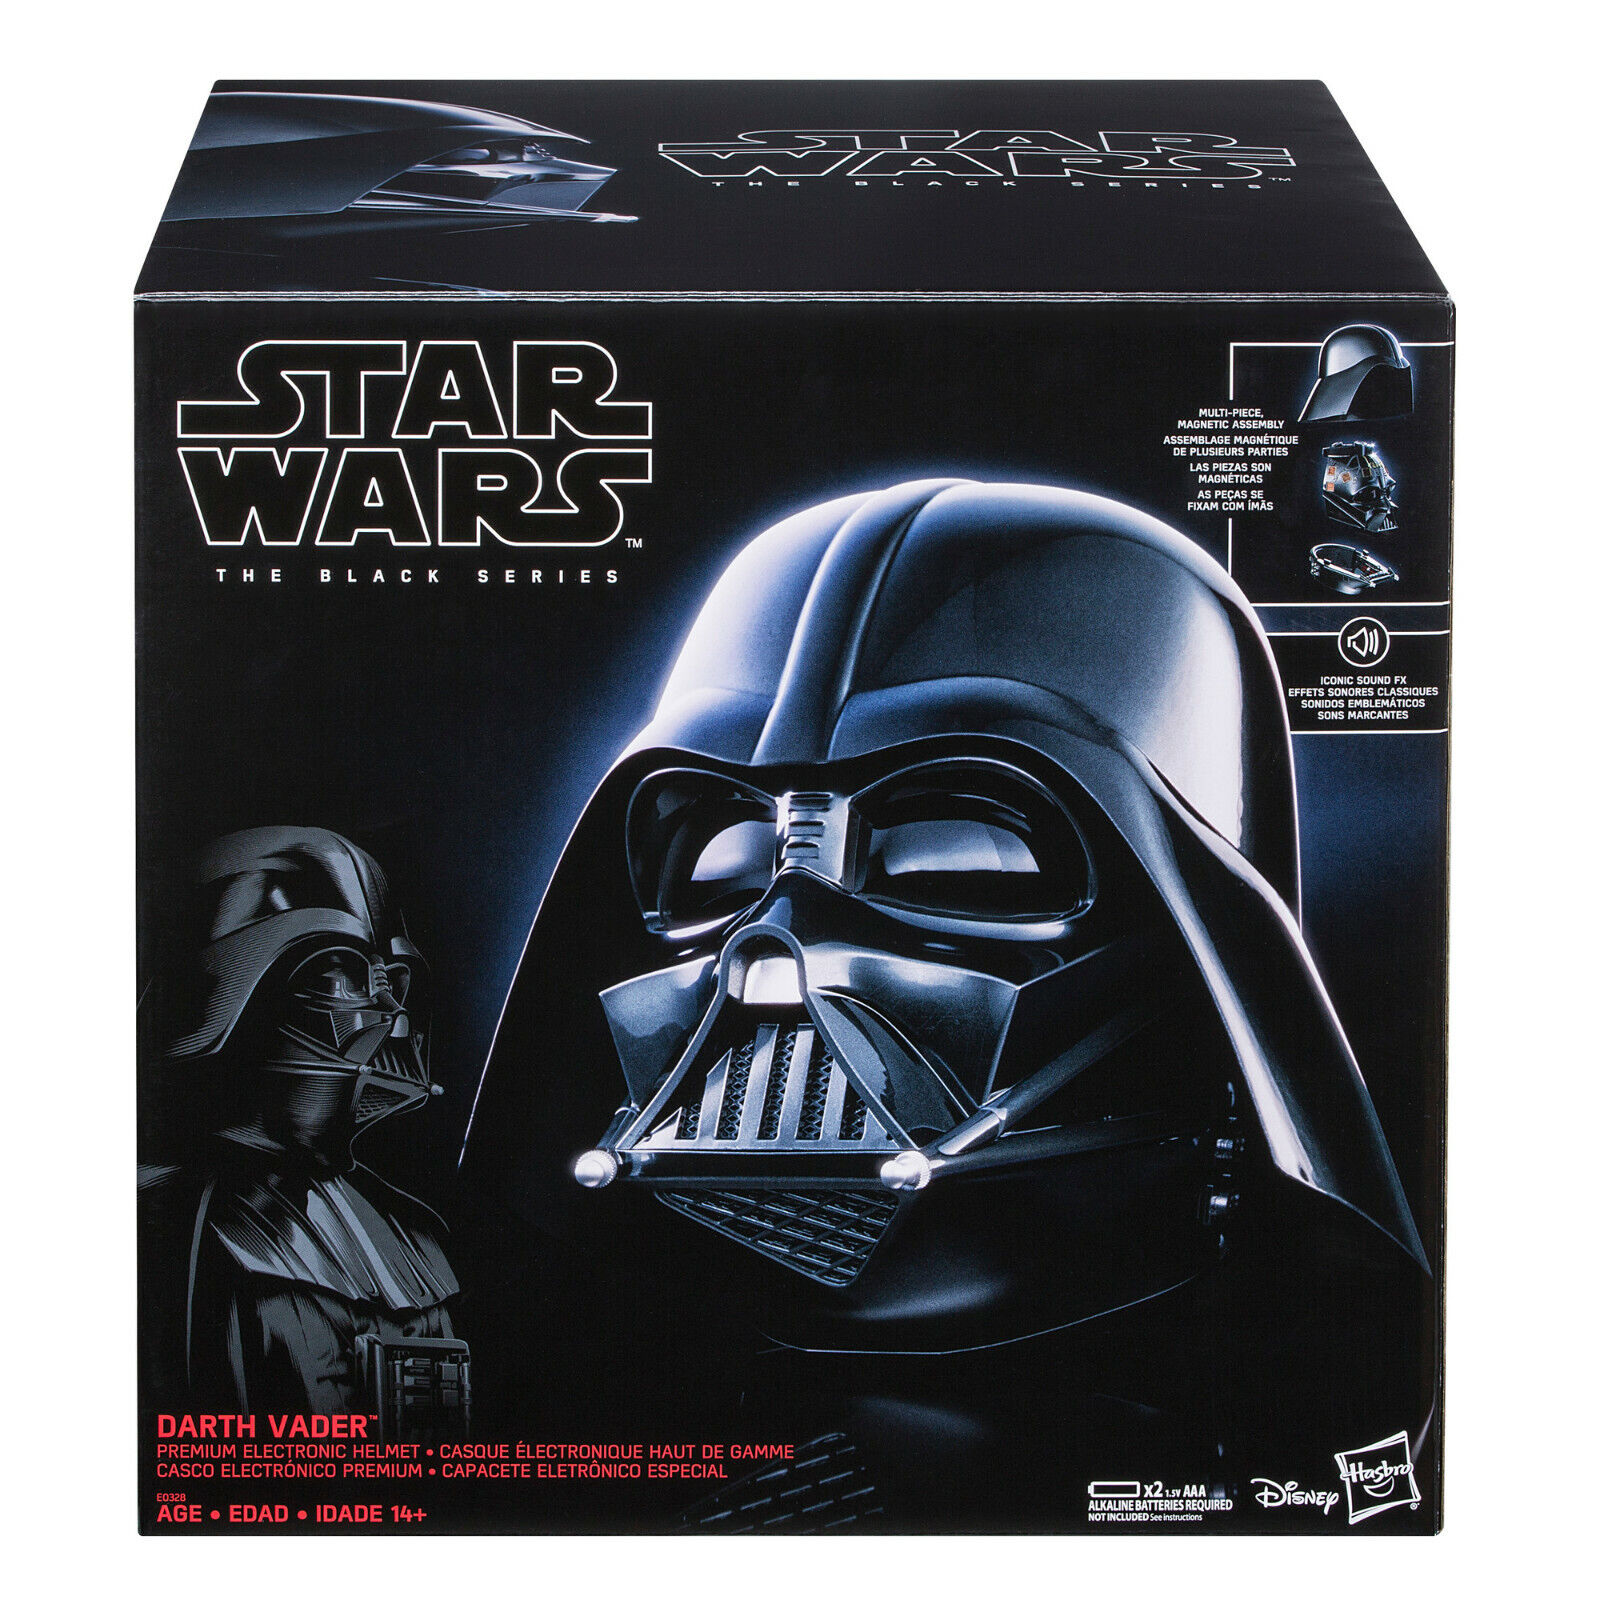 ORIGINAL — Star Wars The Black Series Darth Vader Premium Electronic Helmet NEW